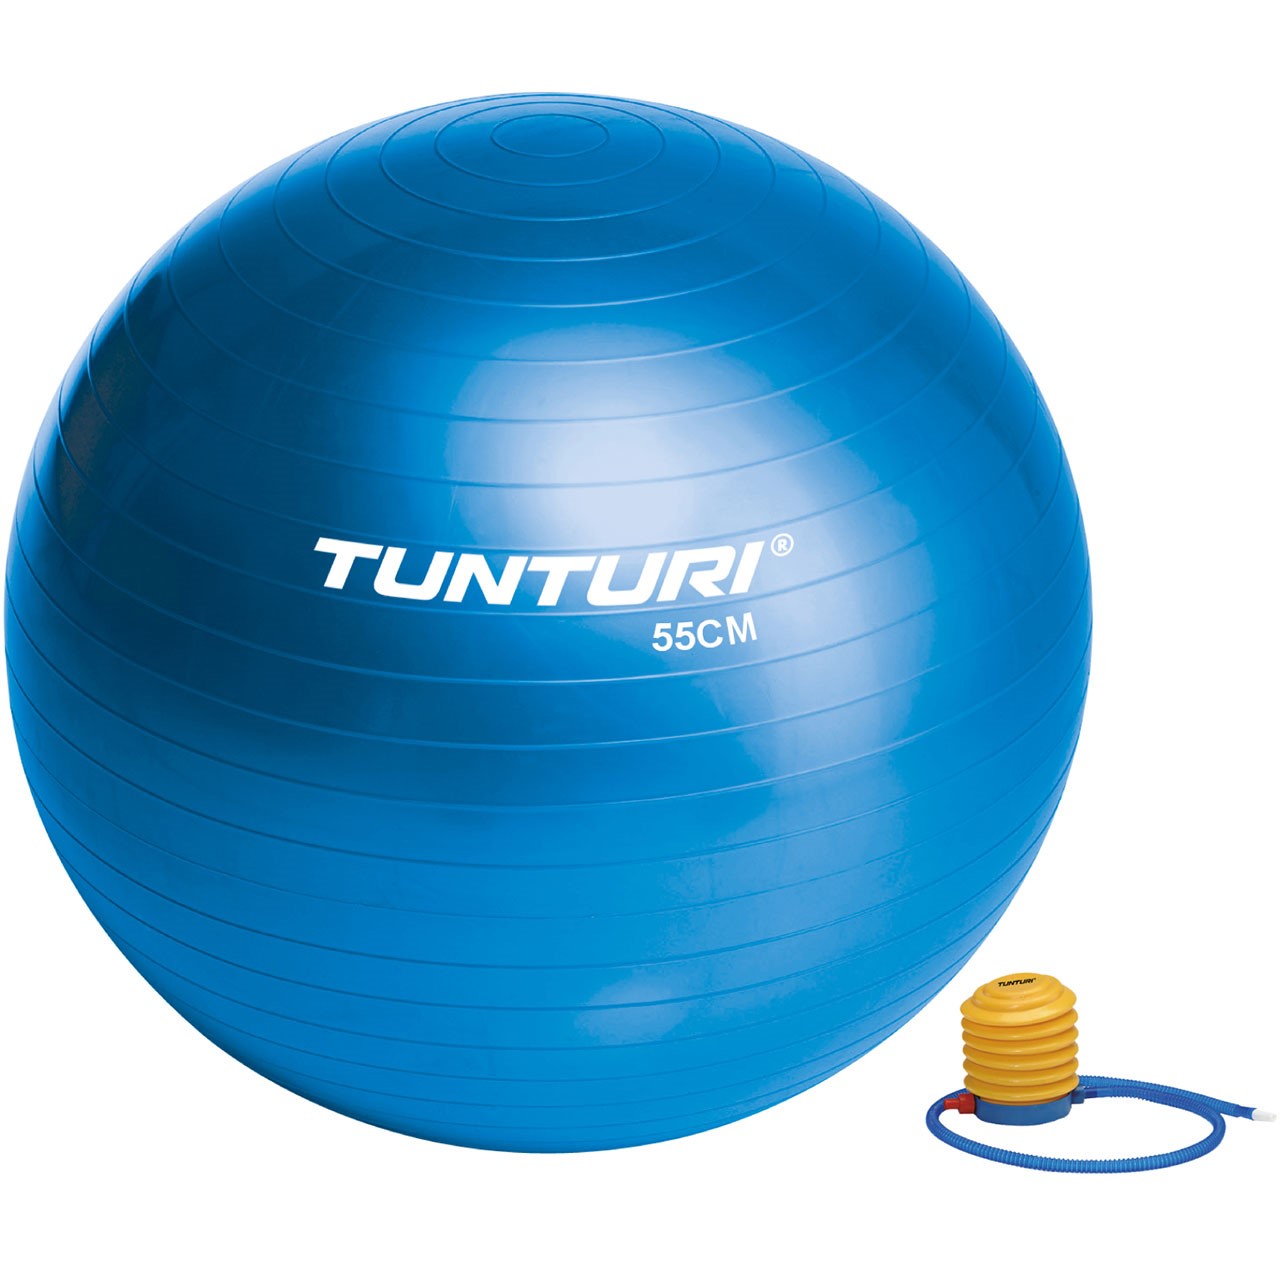 Tunturi Gym Ball - Gymnastikball Sitzball 55 cm